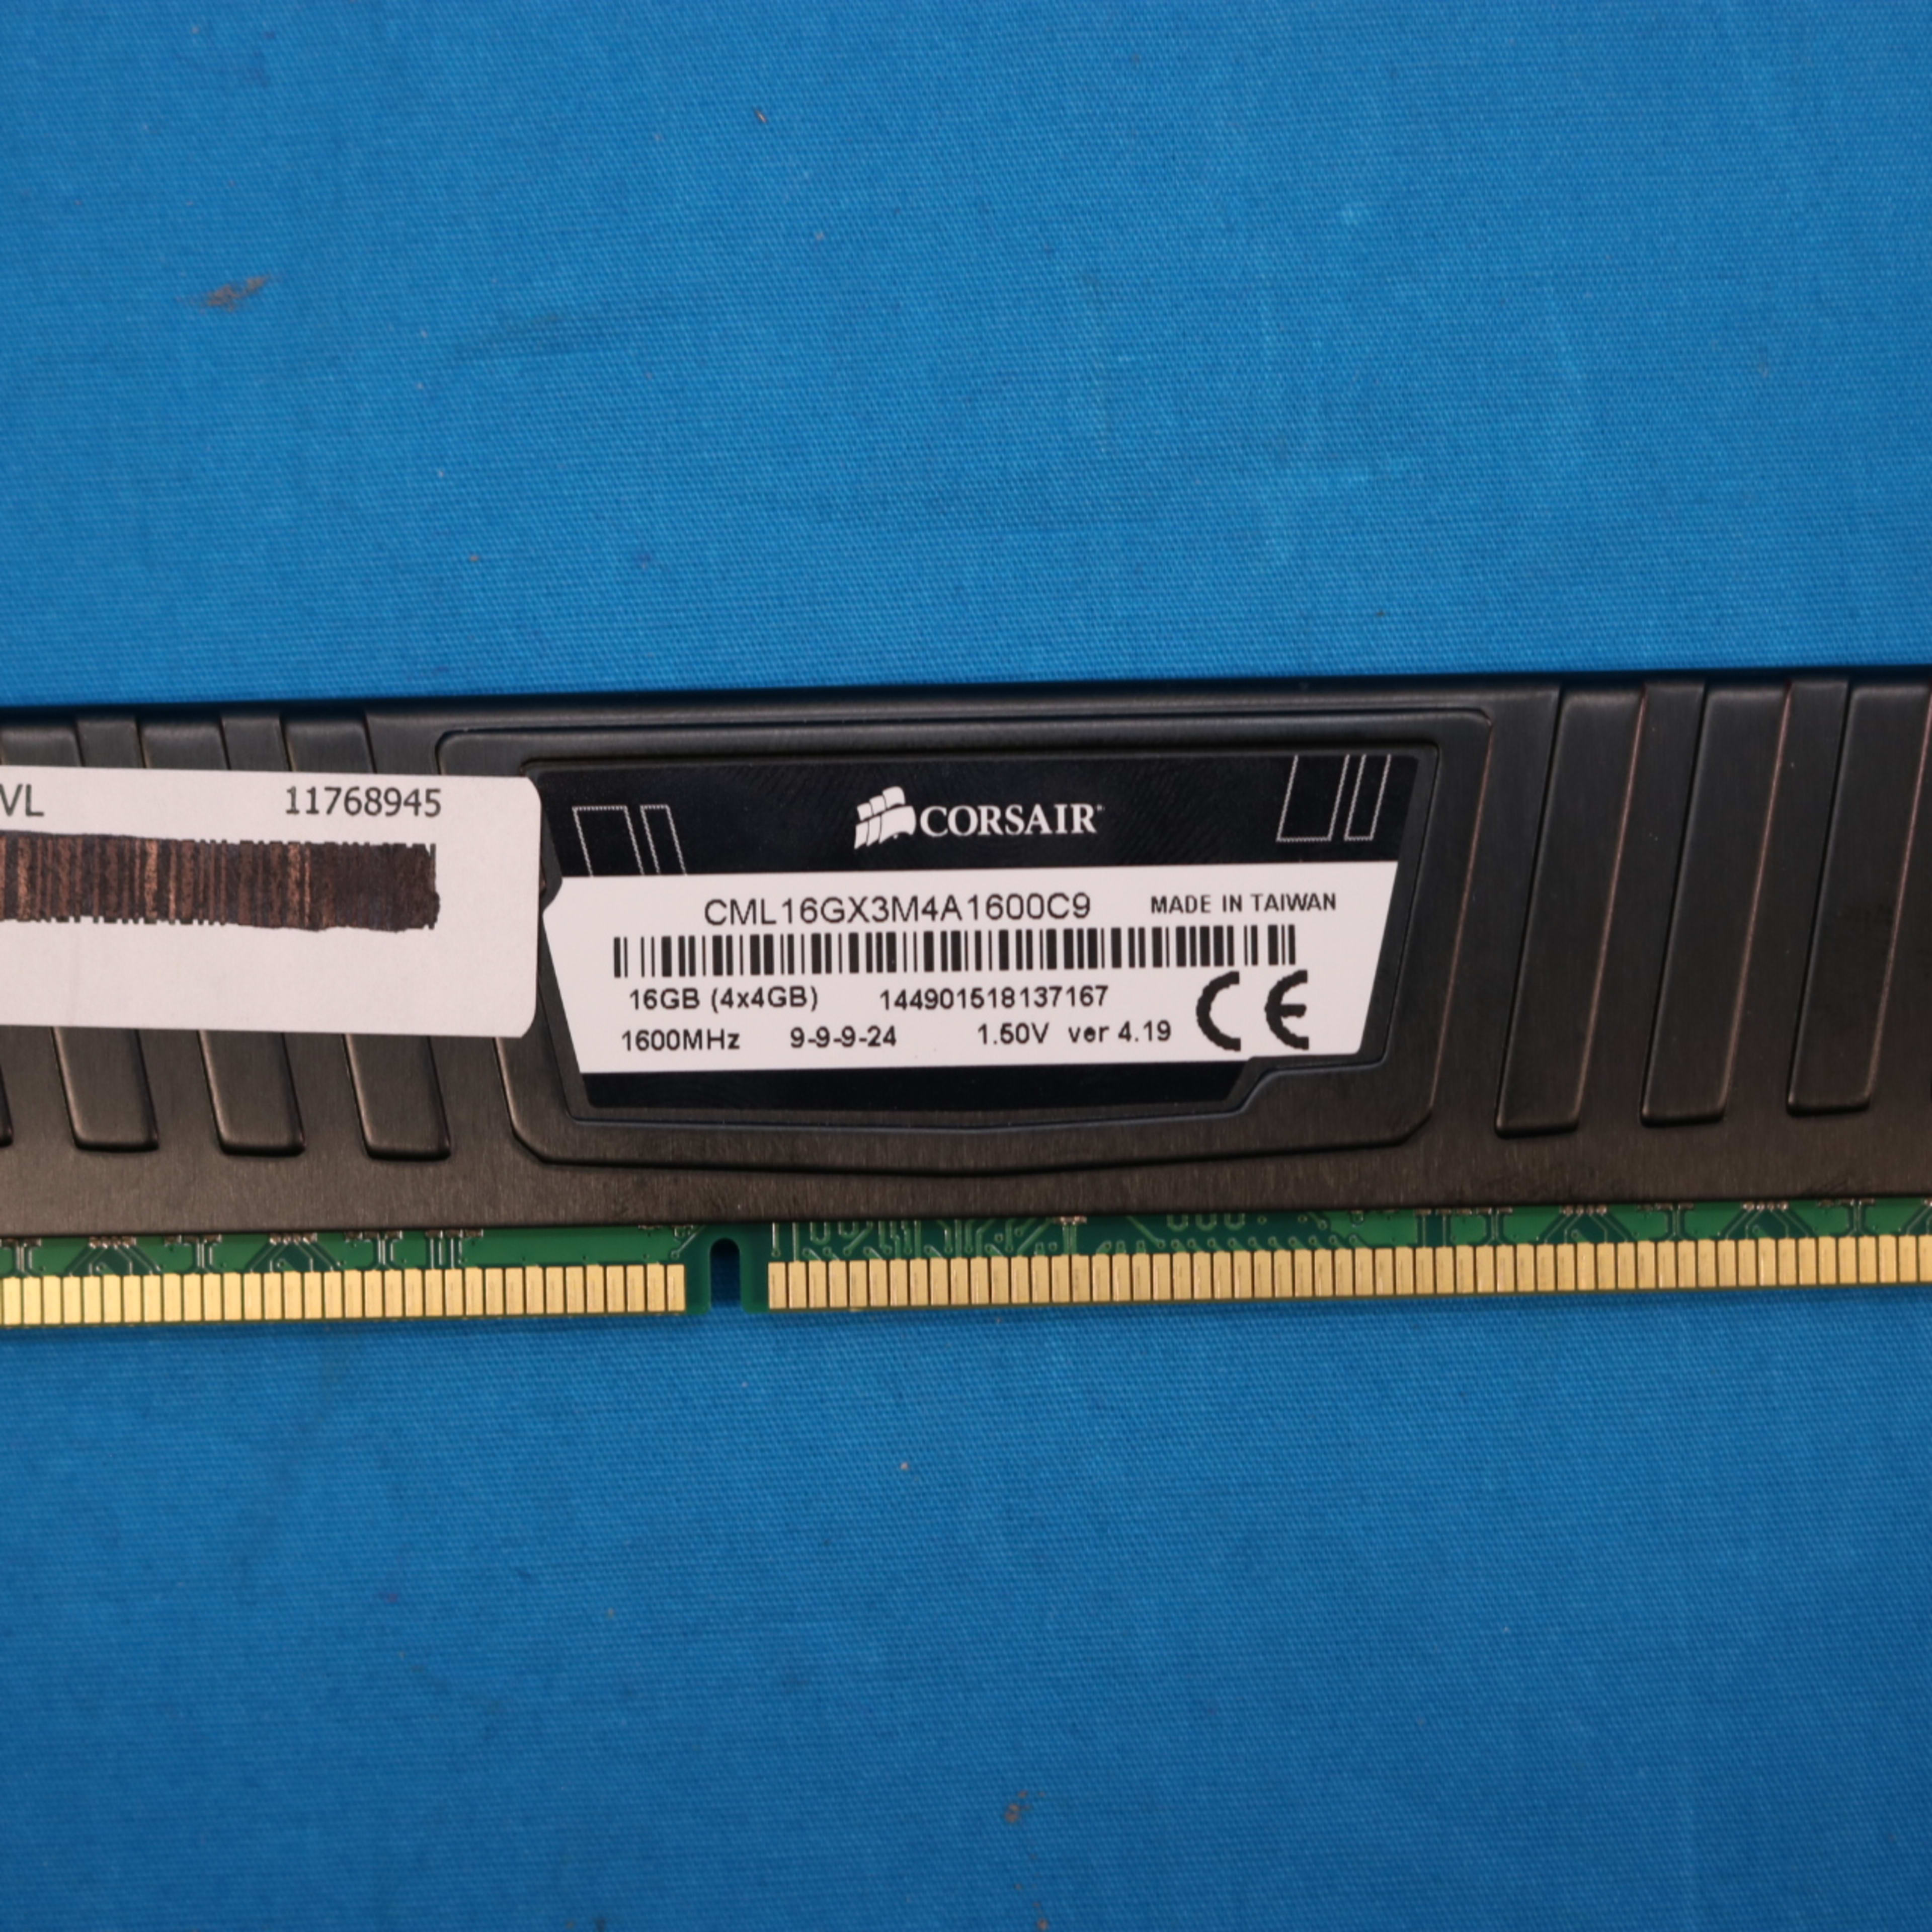 Corsair Vengeance LP 16GB (4x4GB) DDR3 1600MHz CL9 Desktop RAM Kit - 4143097207